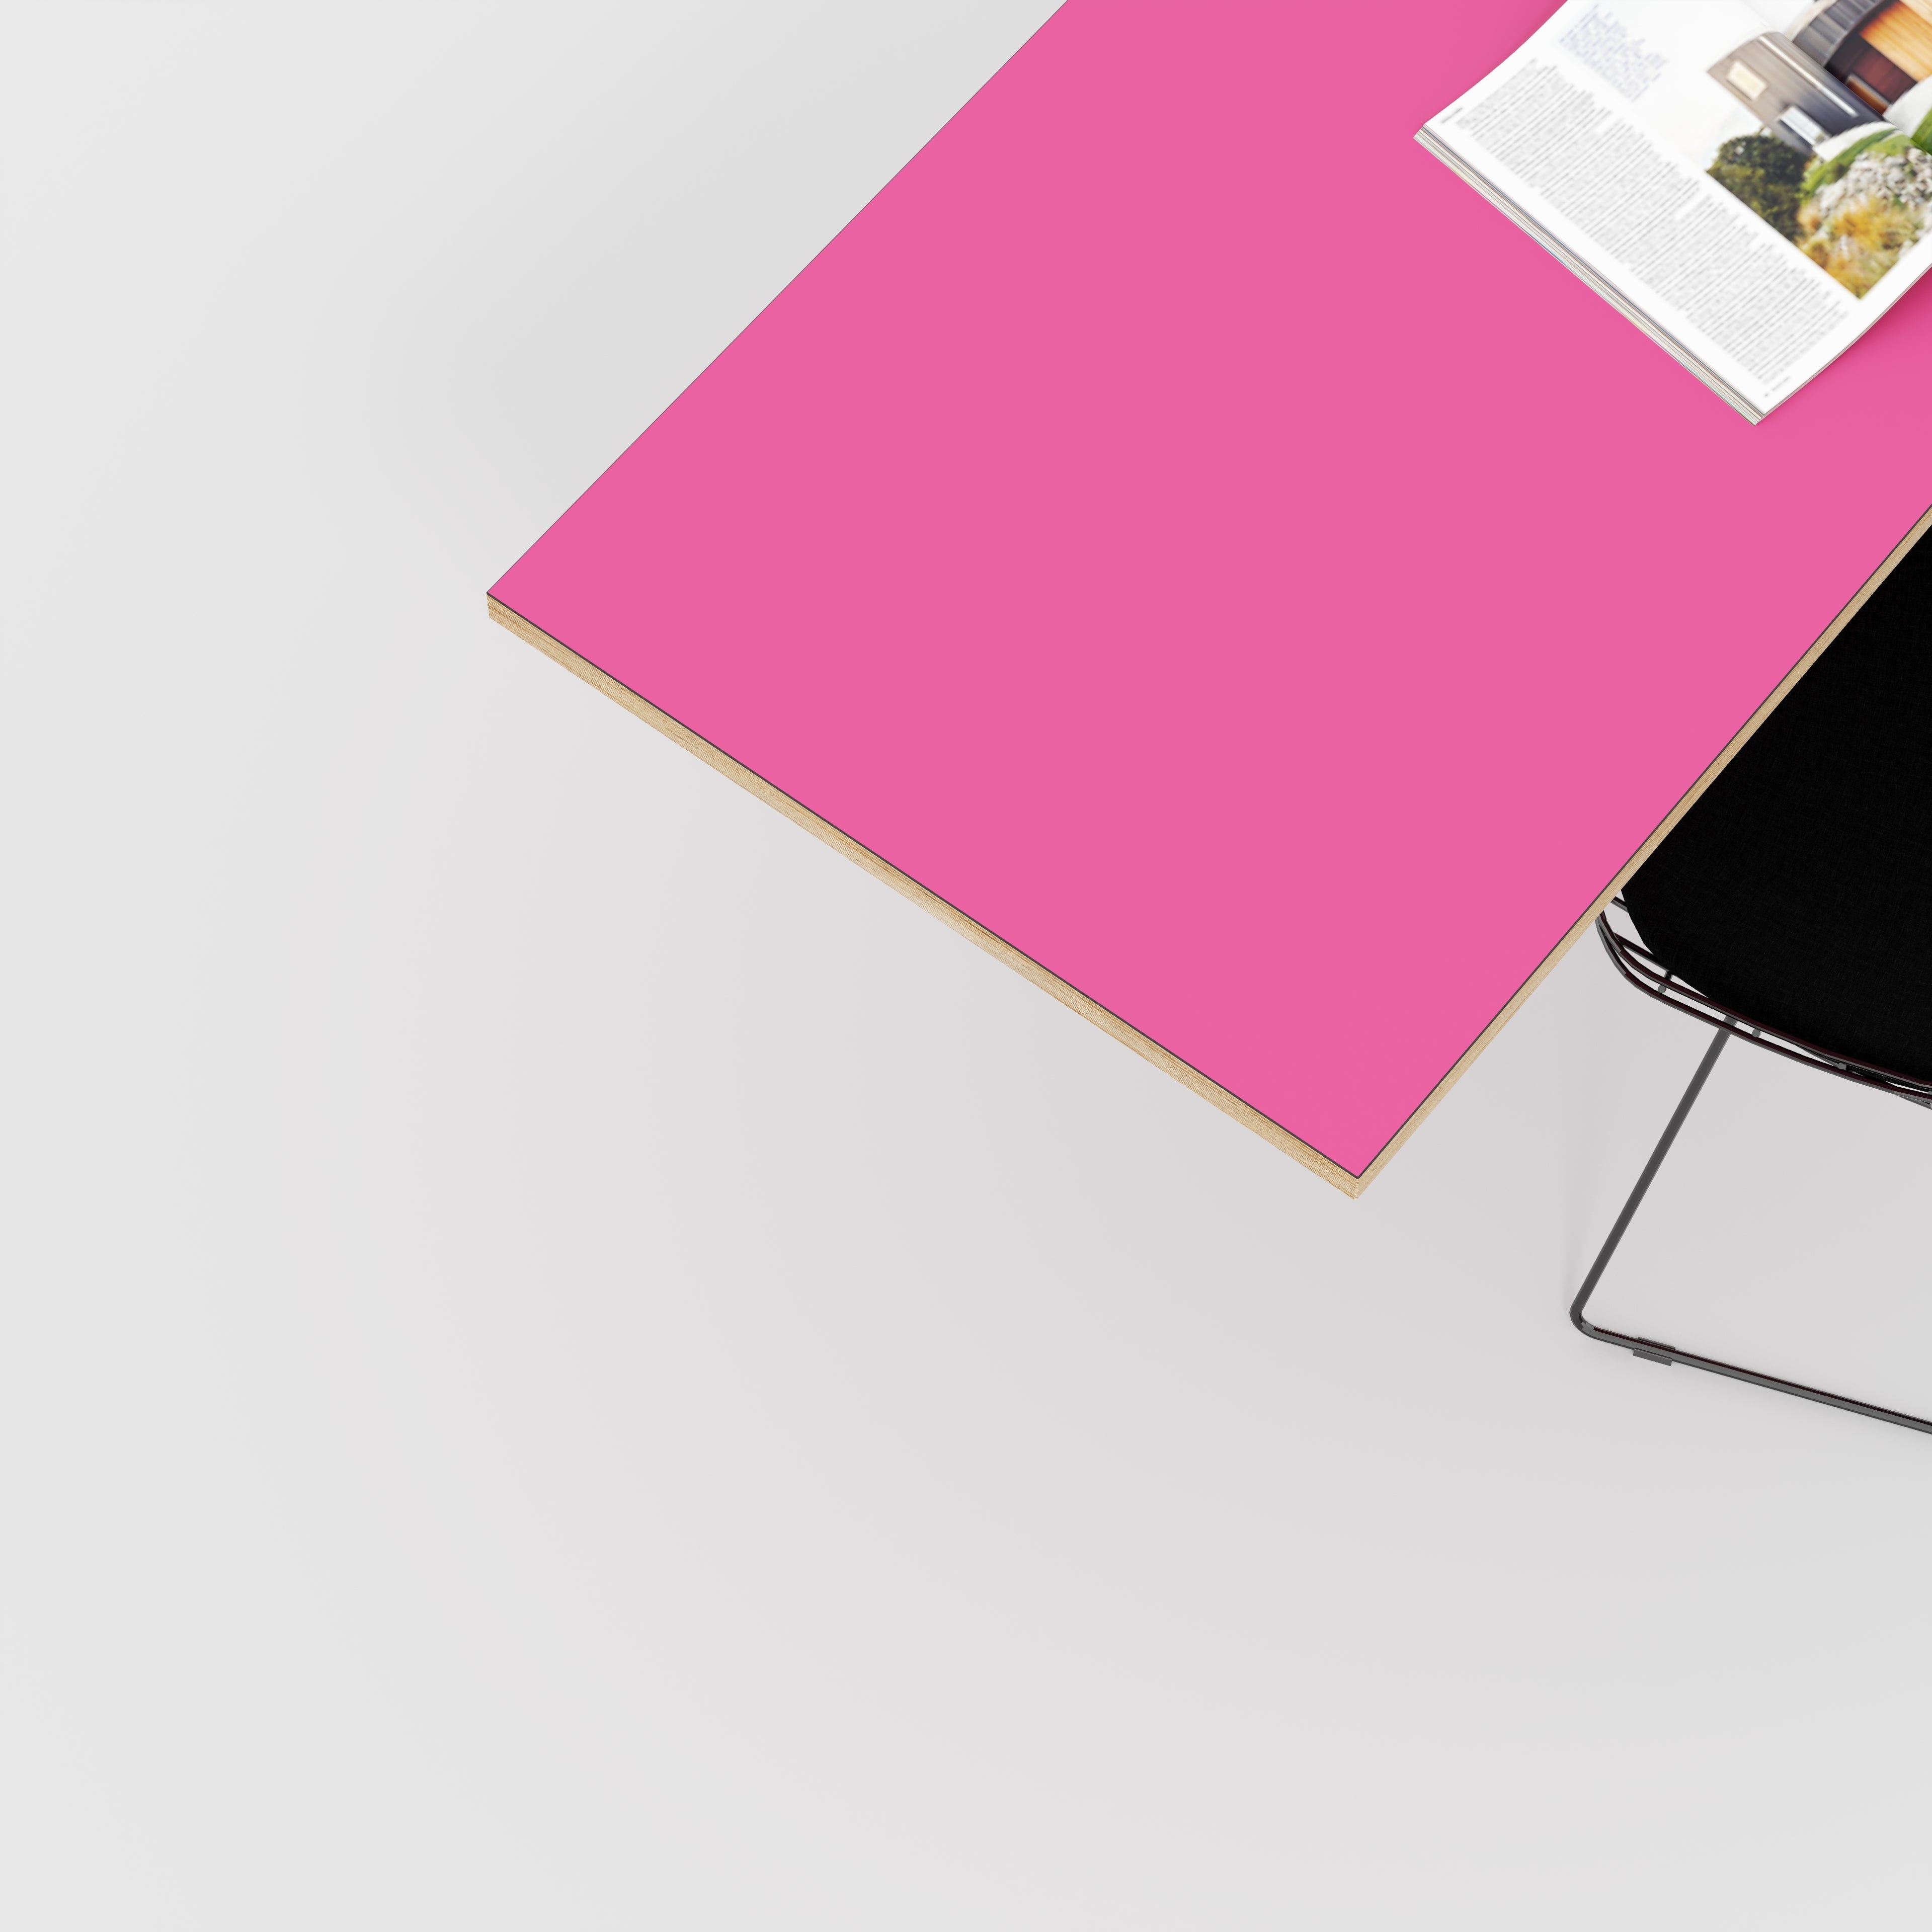 Plywood Desktop - Formica Juicy Pink - 1600(w) x 800(d)